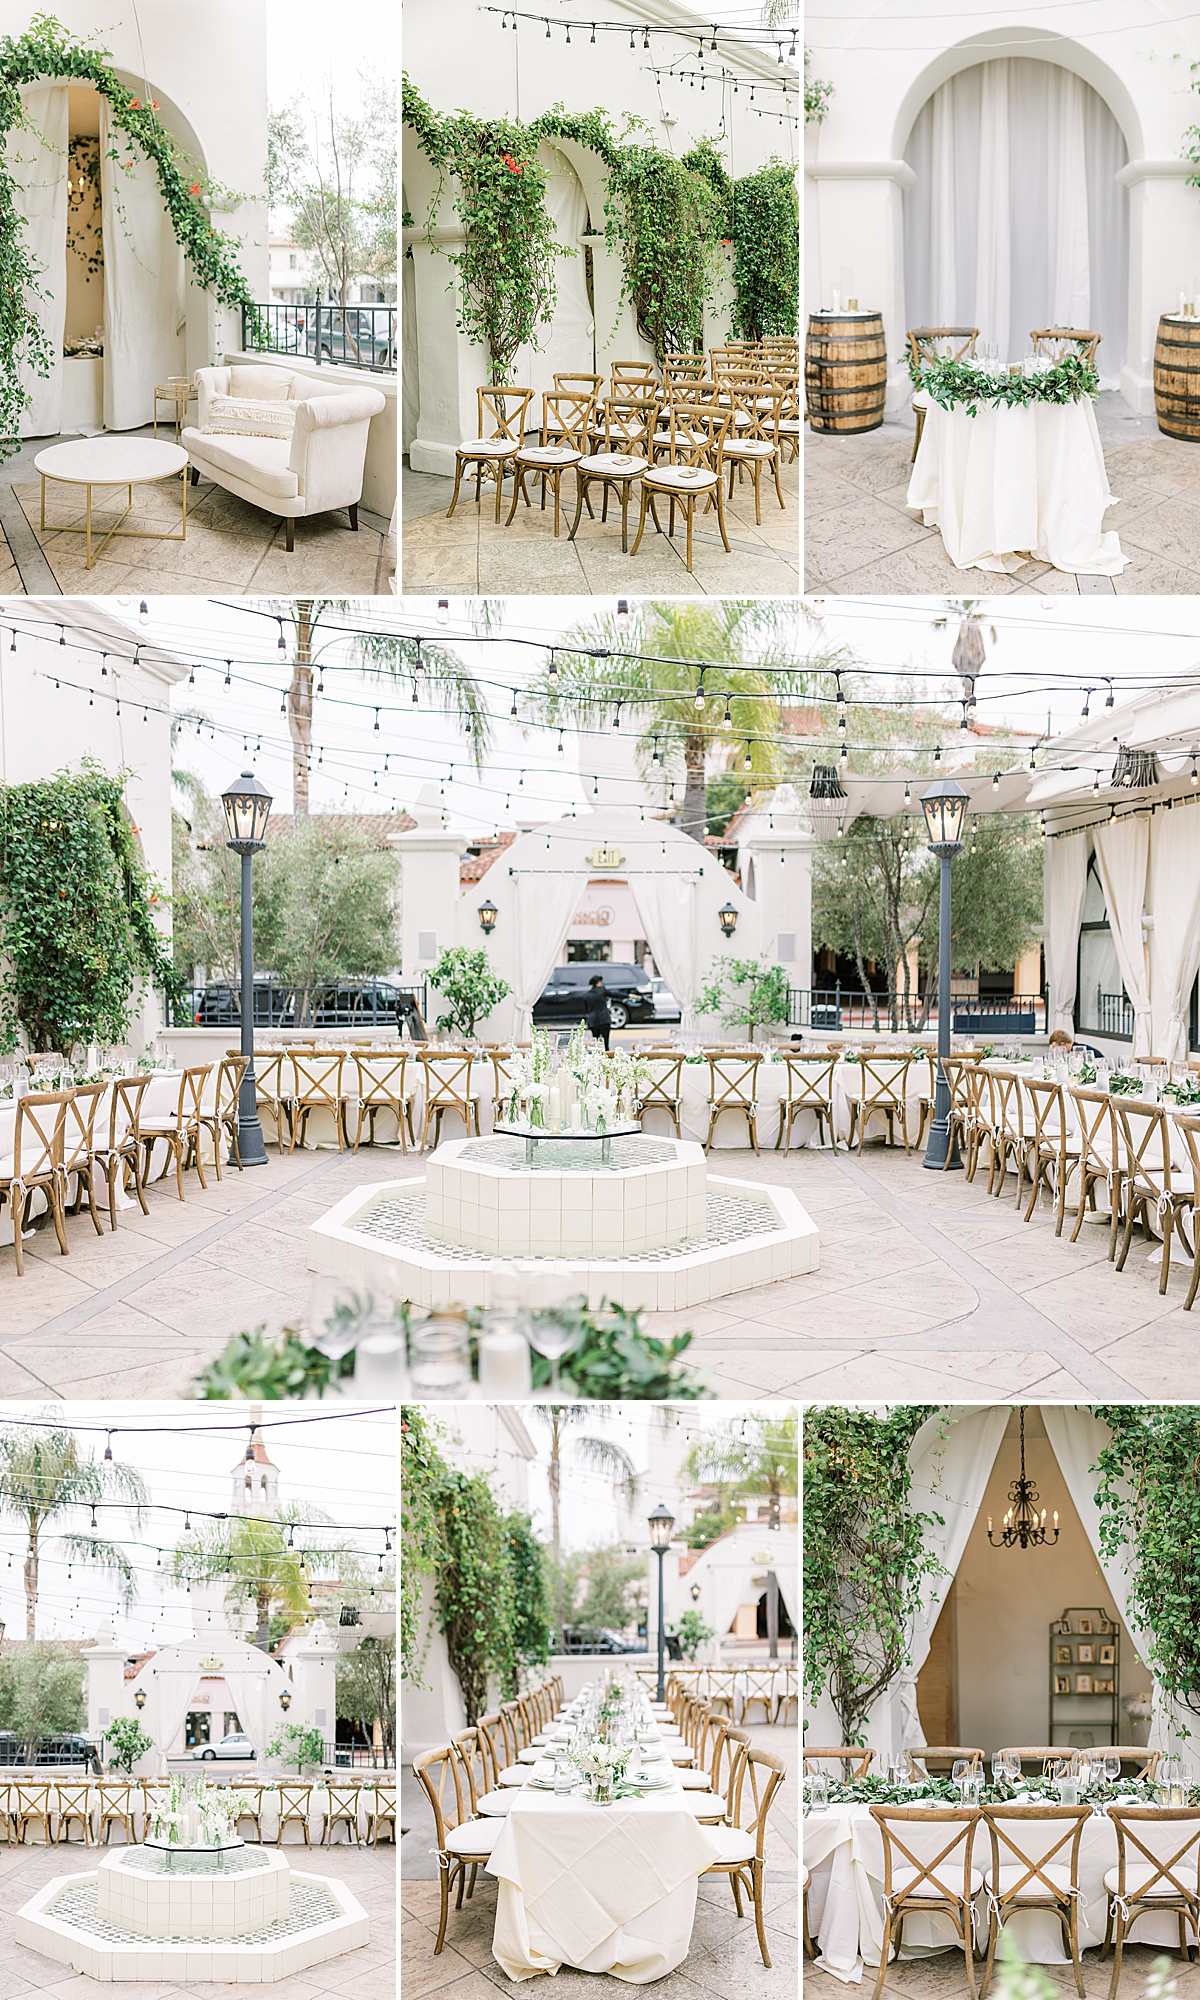 Villa & Vine is one of many gorgeous Garden Wedding Venues in Santa Barbara, California.